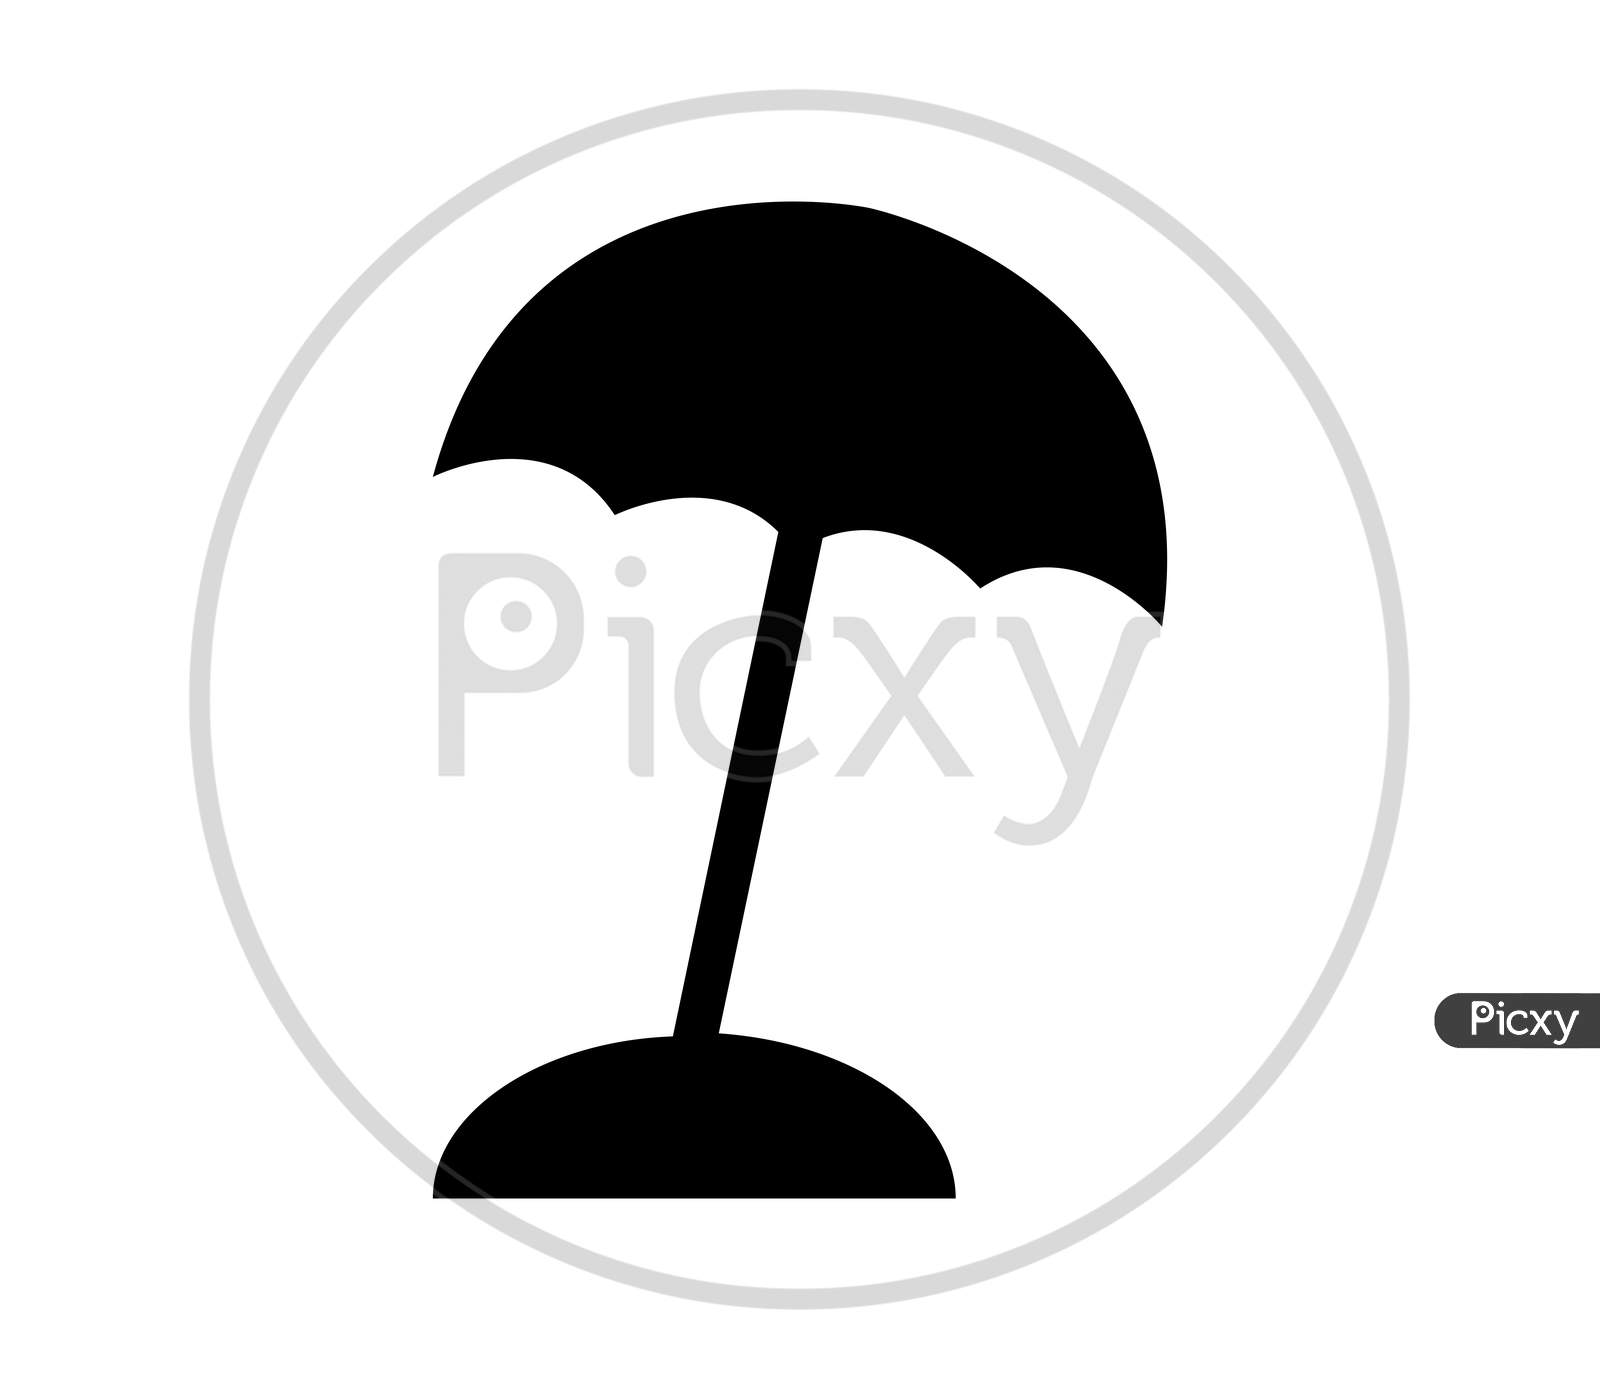 Sea Umbrella Icon Illustrated On A White Background